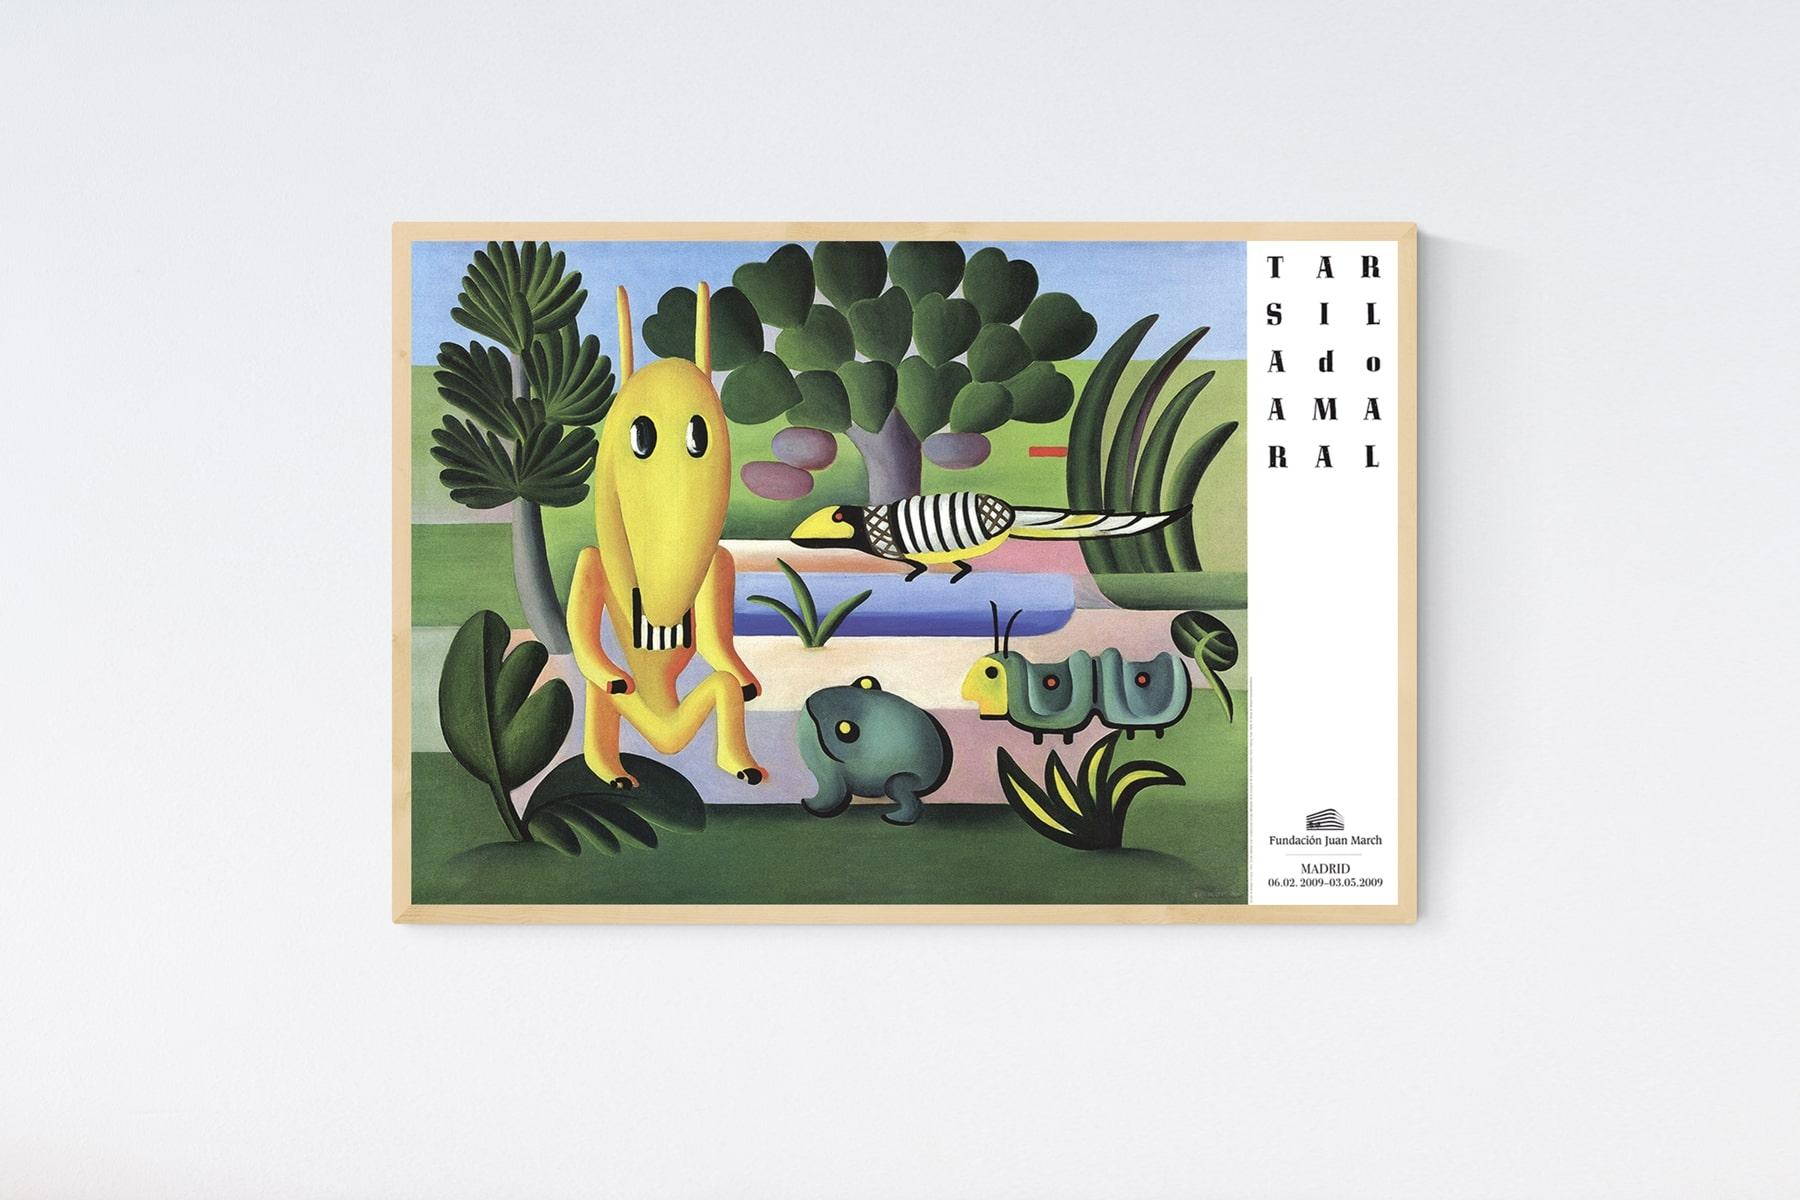 'A Cuca' Exhibition Poster avant-garde Brazilian Modernist - Print by Tarsila do Amaral